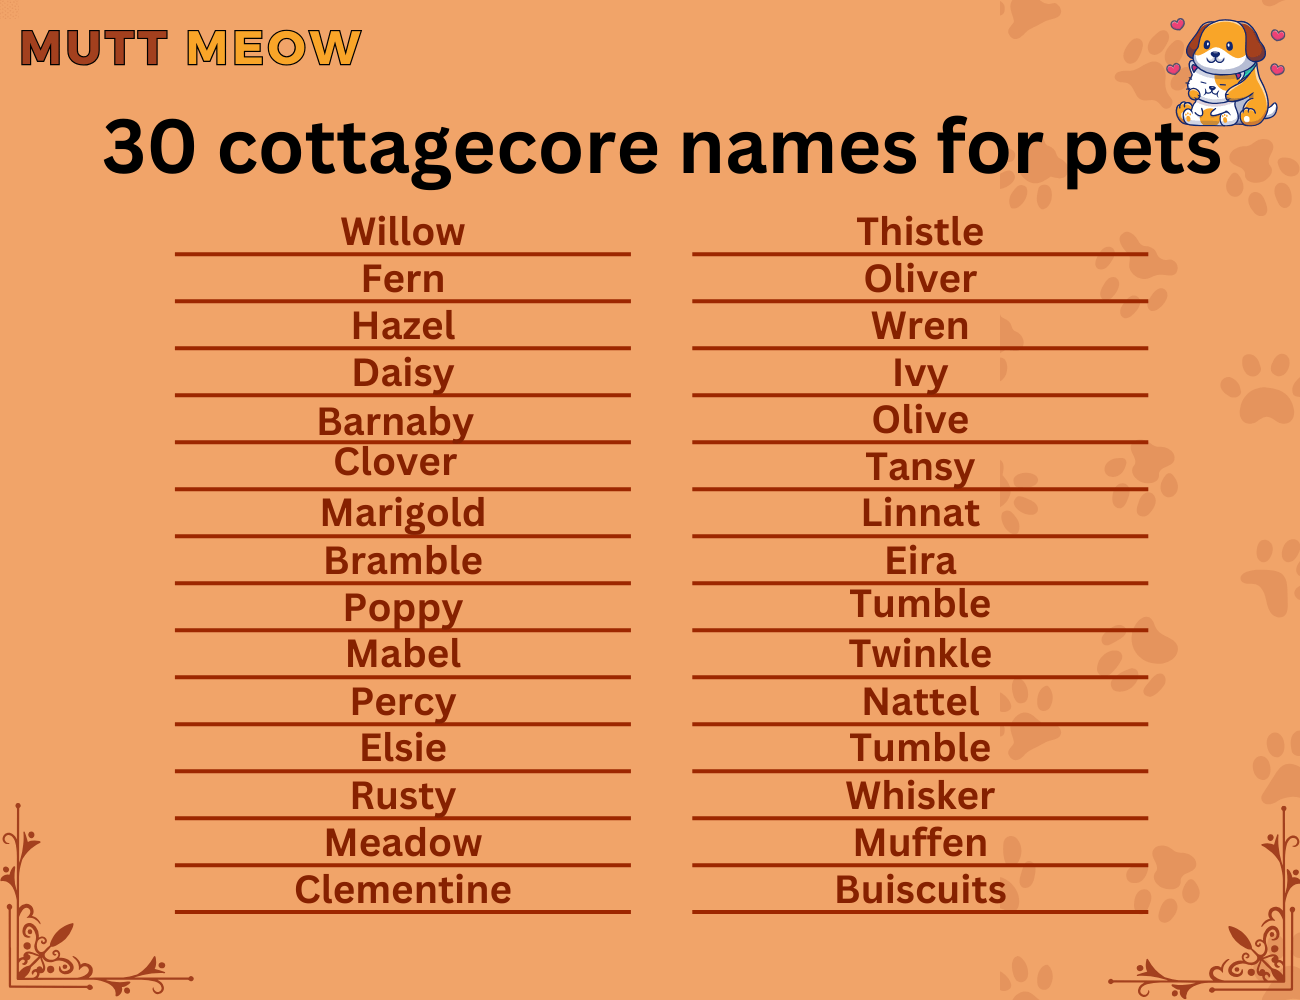 30 cottagecore names for pets